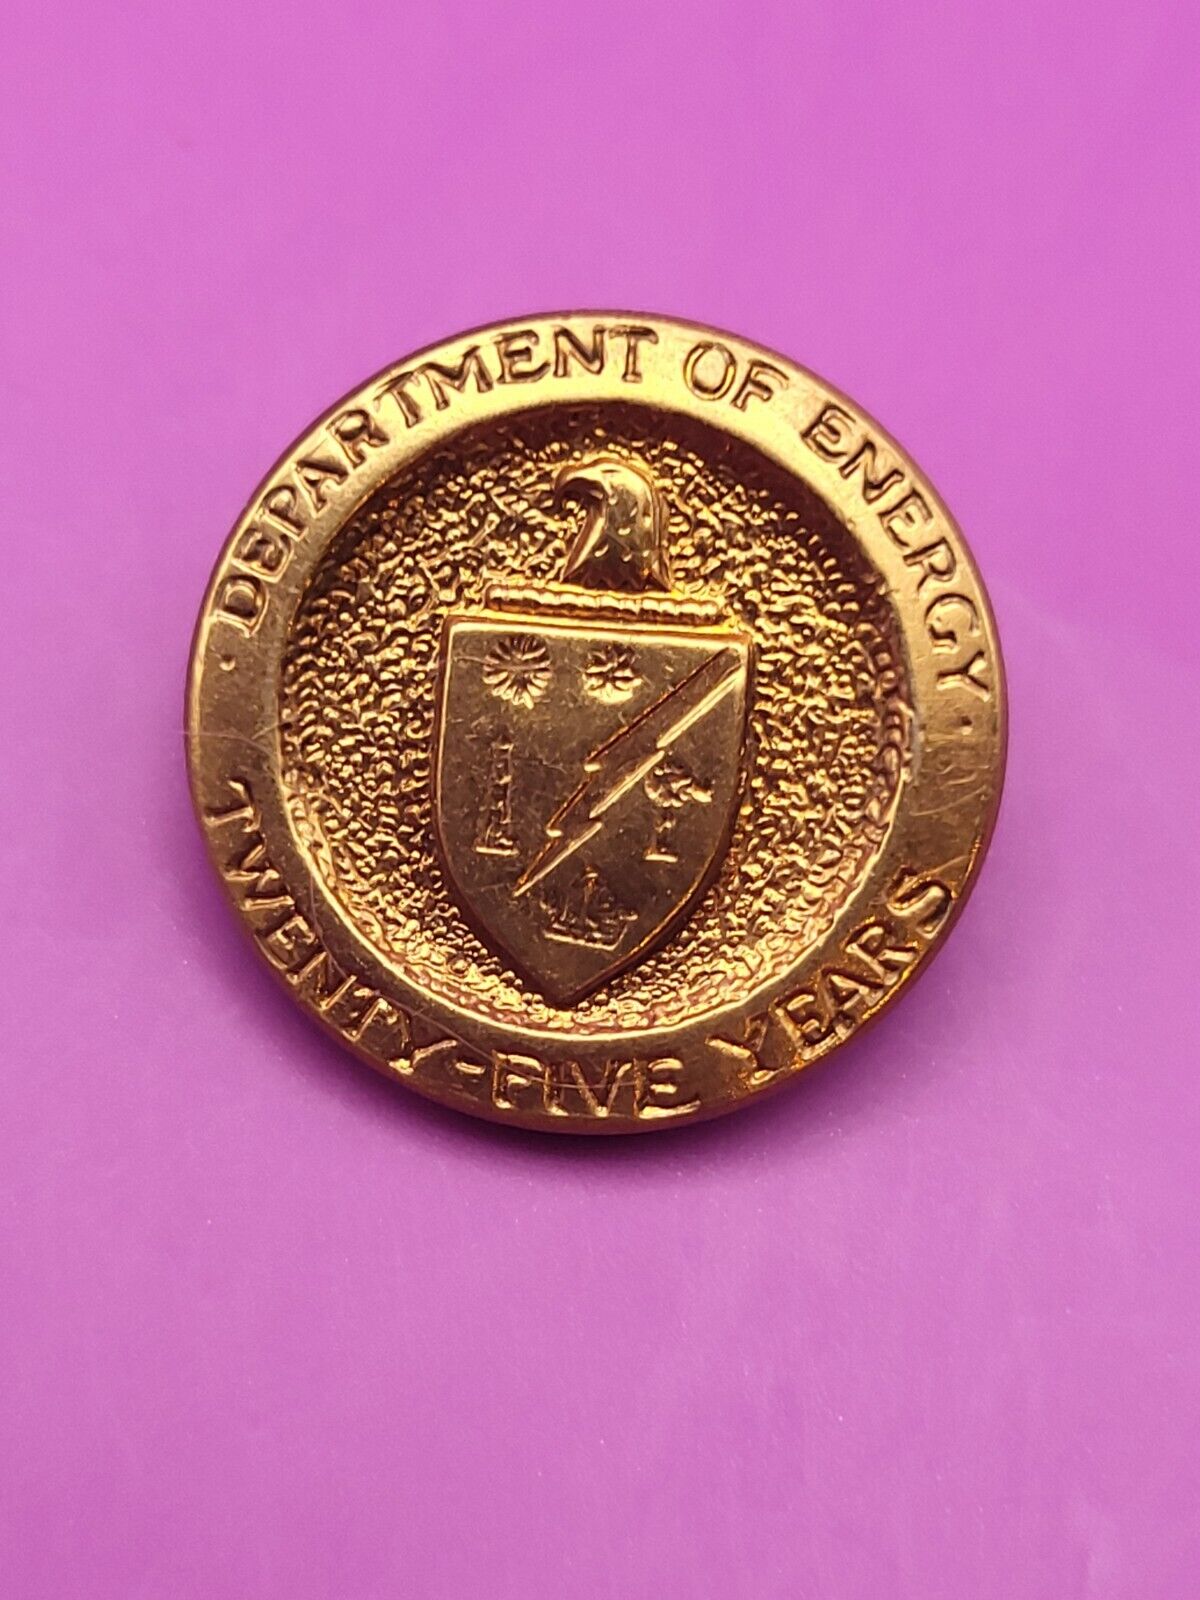 Vintage Department of Energy 25 Twenty five Years Pin Back Badge Lapel Hat Pin